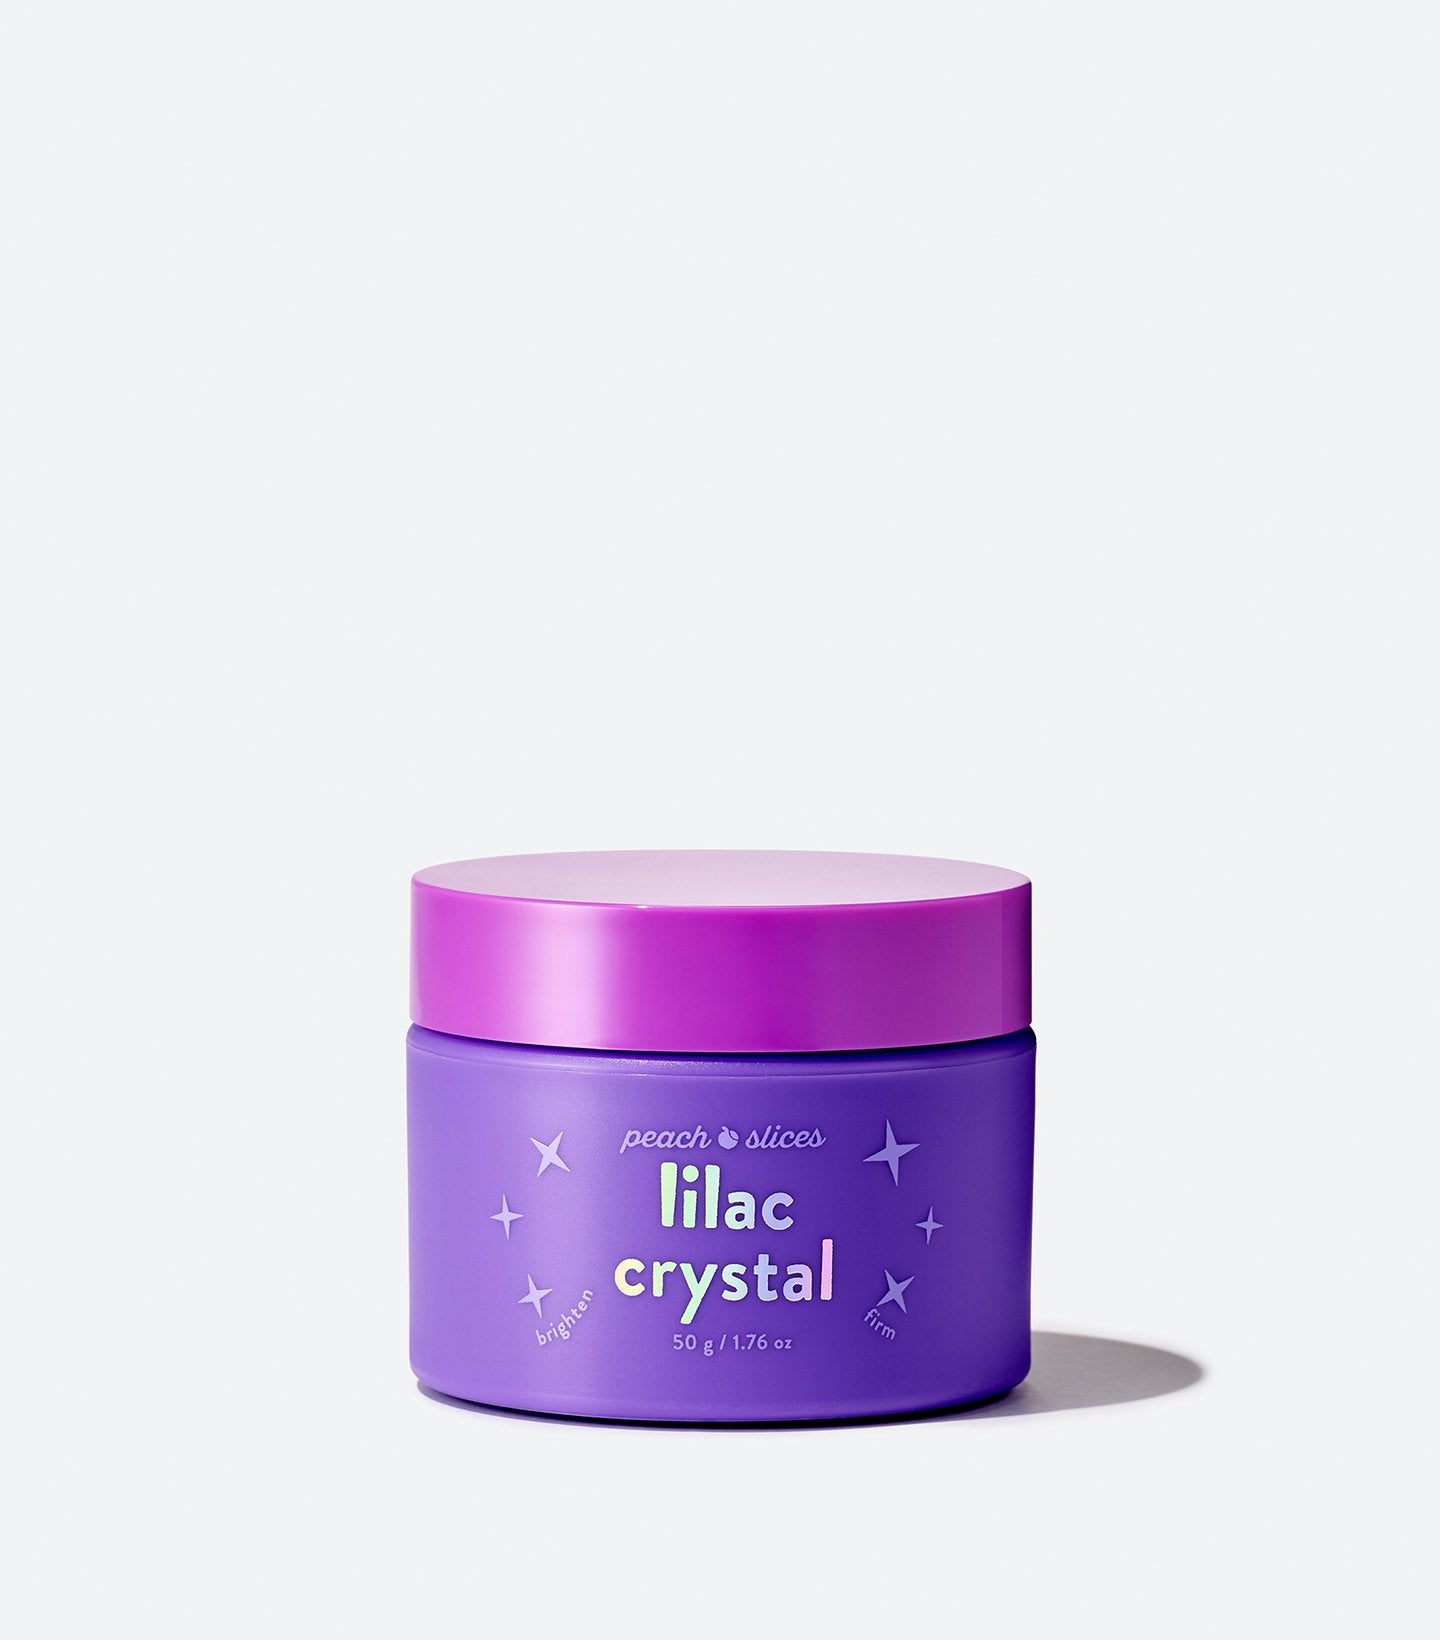 Lilac Crystal Brightening Shimmer Peel-Off Mask